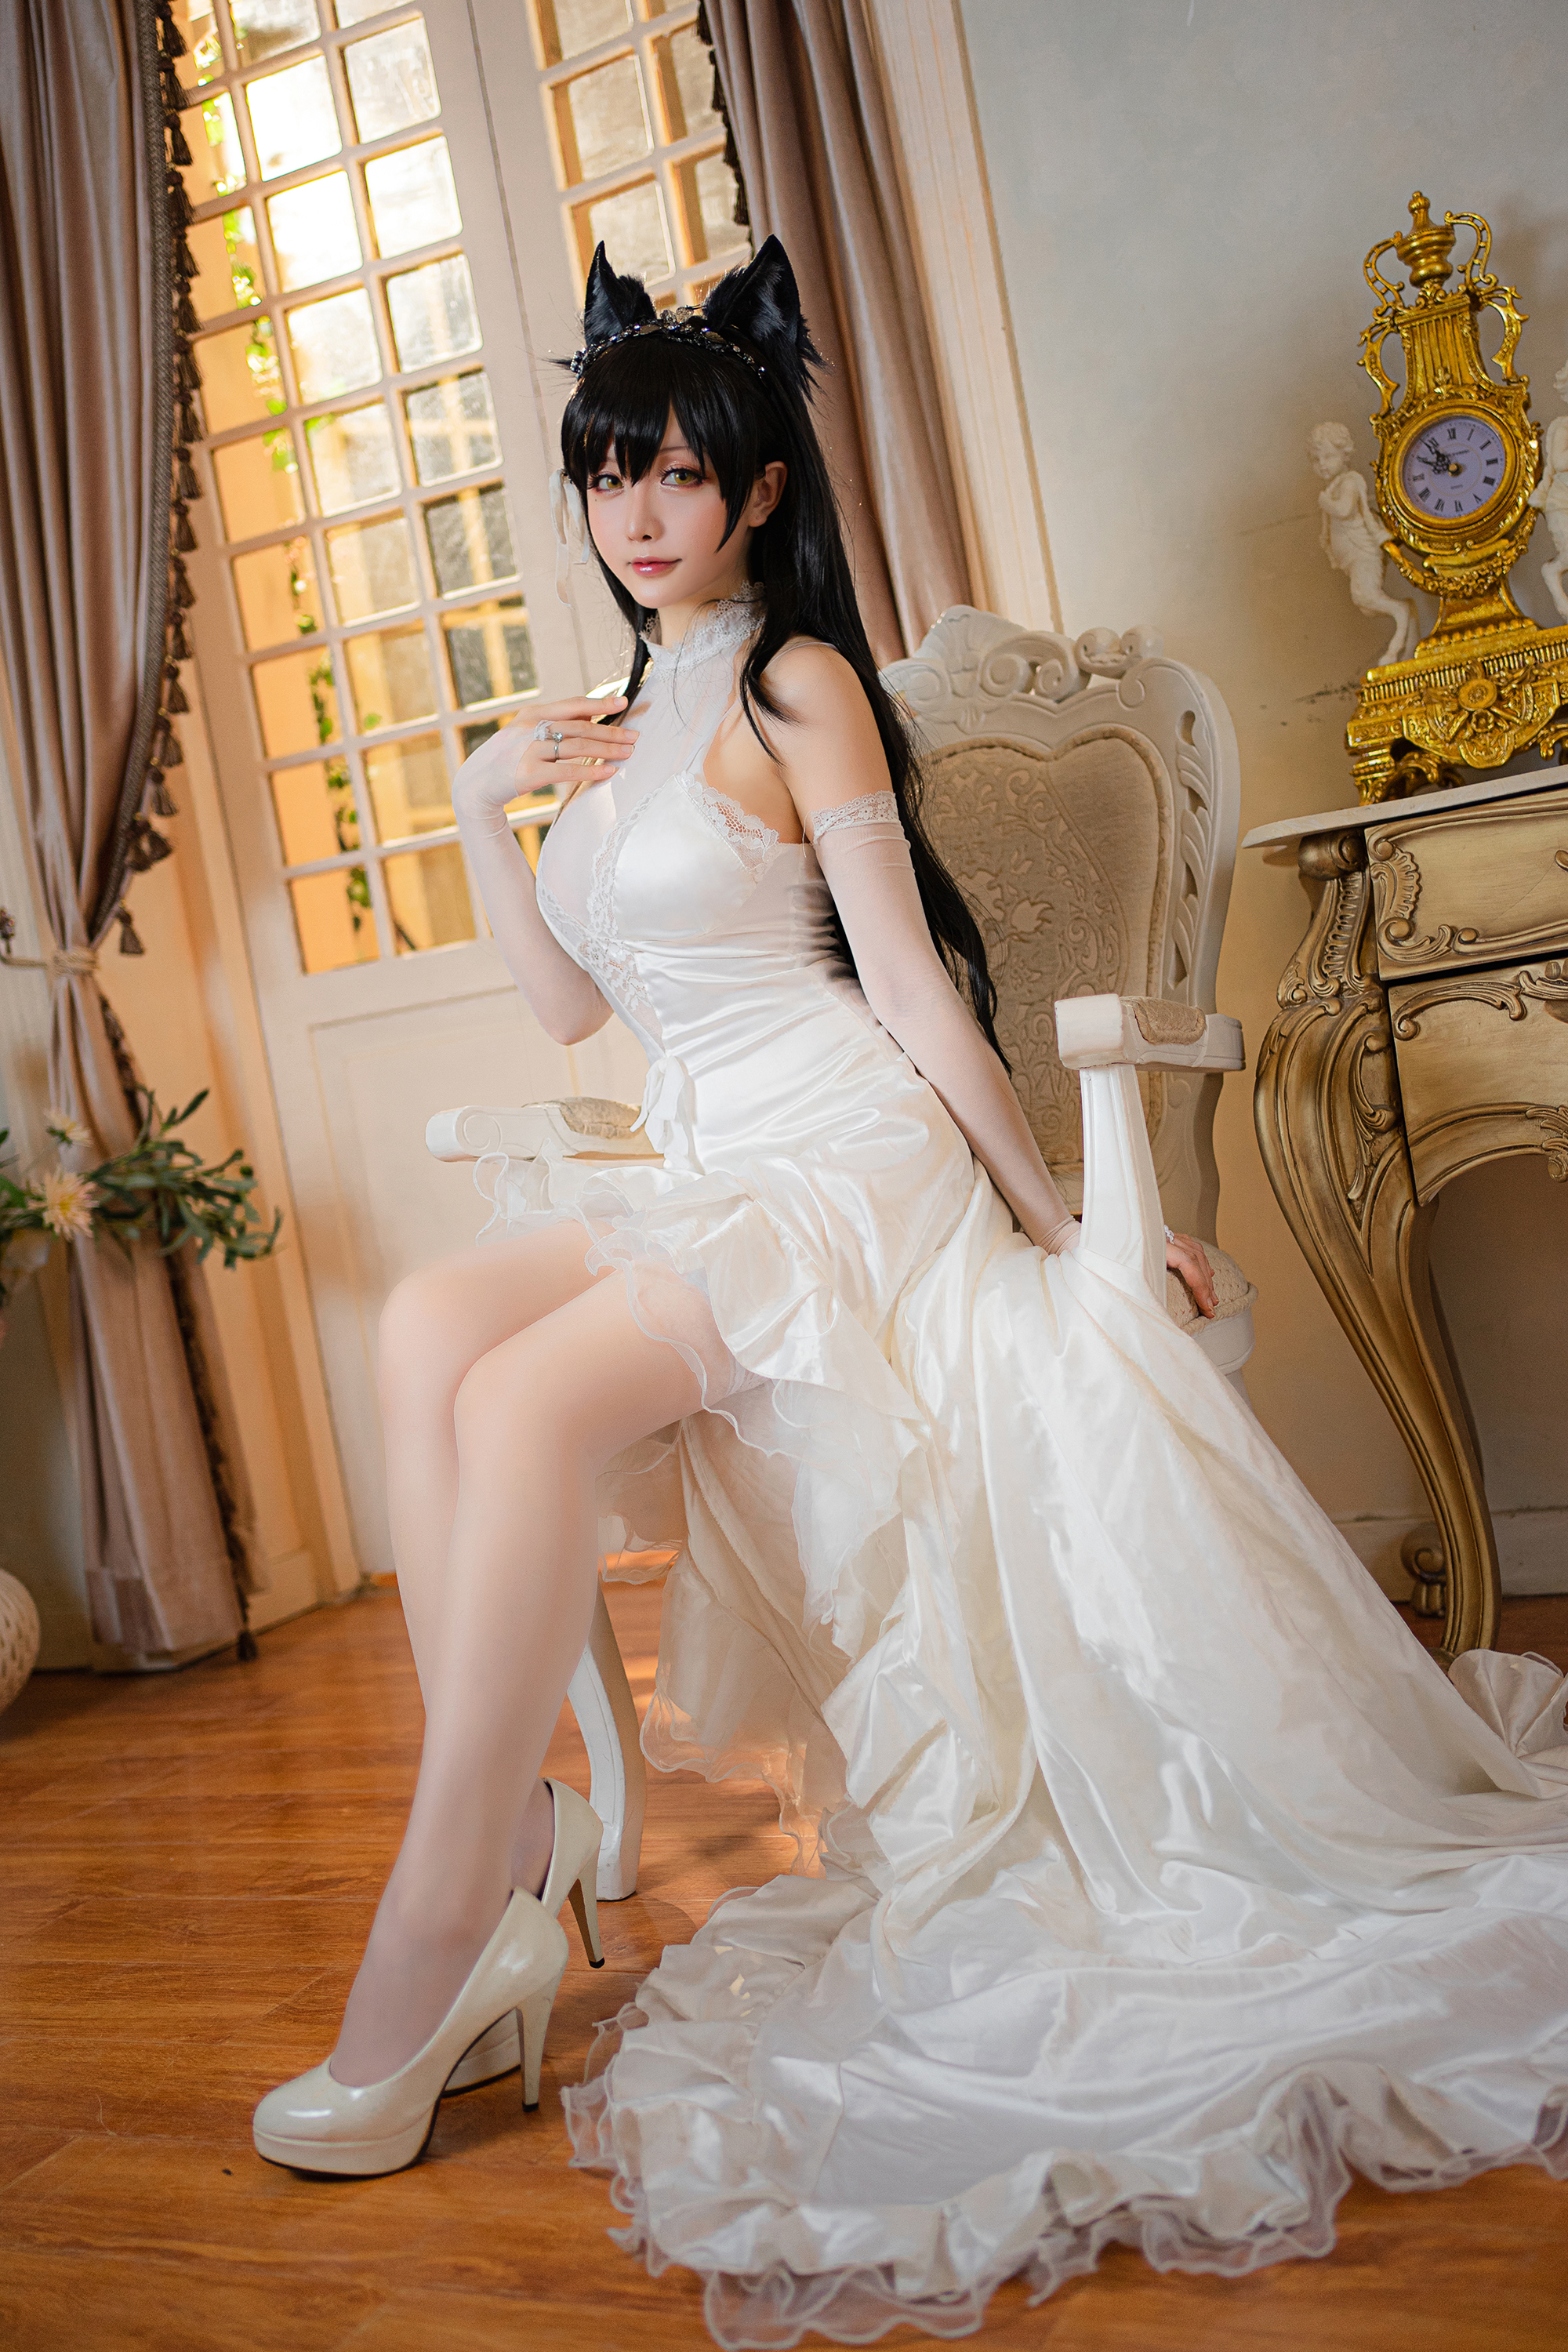 Atago Azur Lane Hoshilily Cosplay Asian Wedding Dress High Heels White Women Indoors Indoors Legs He 2000x3000